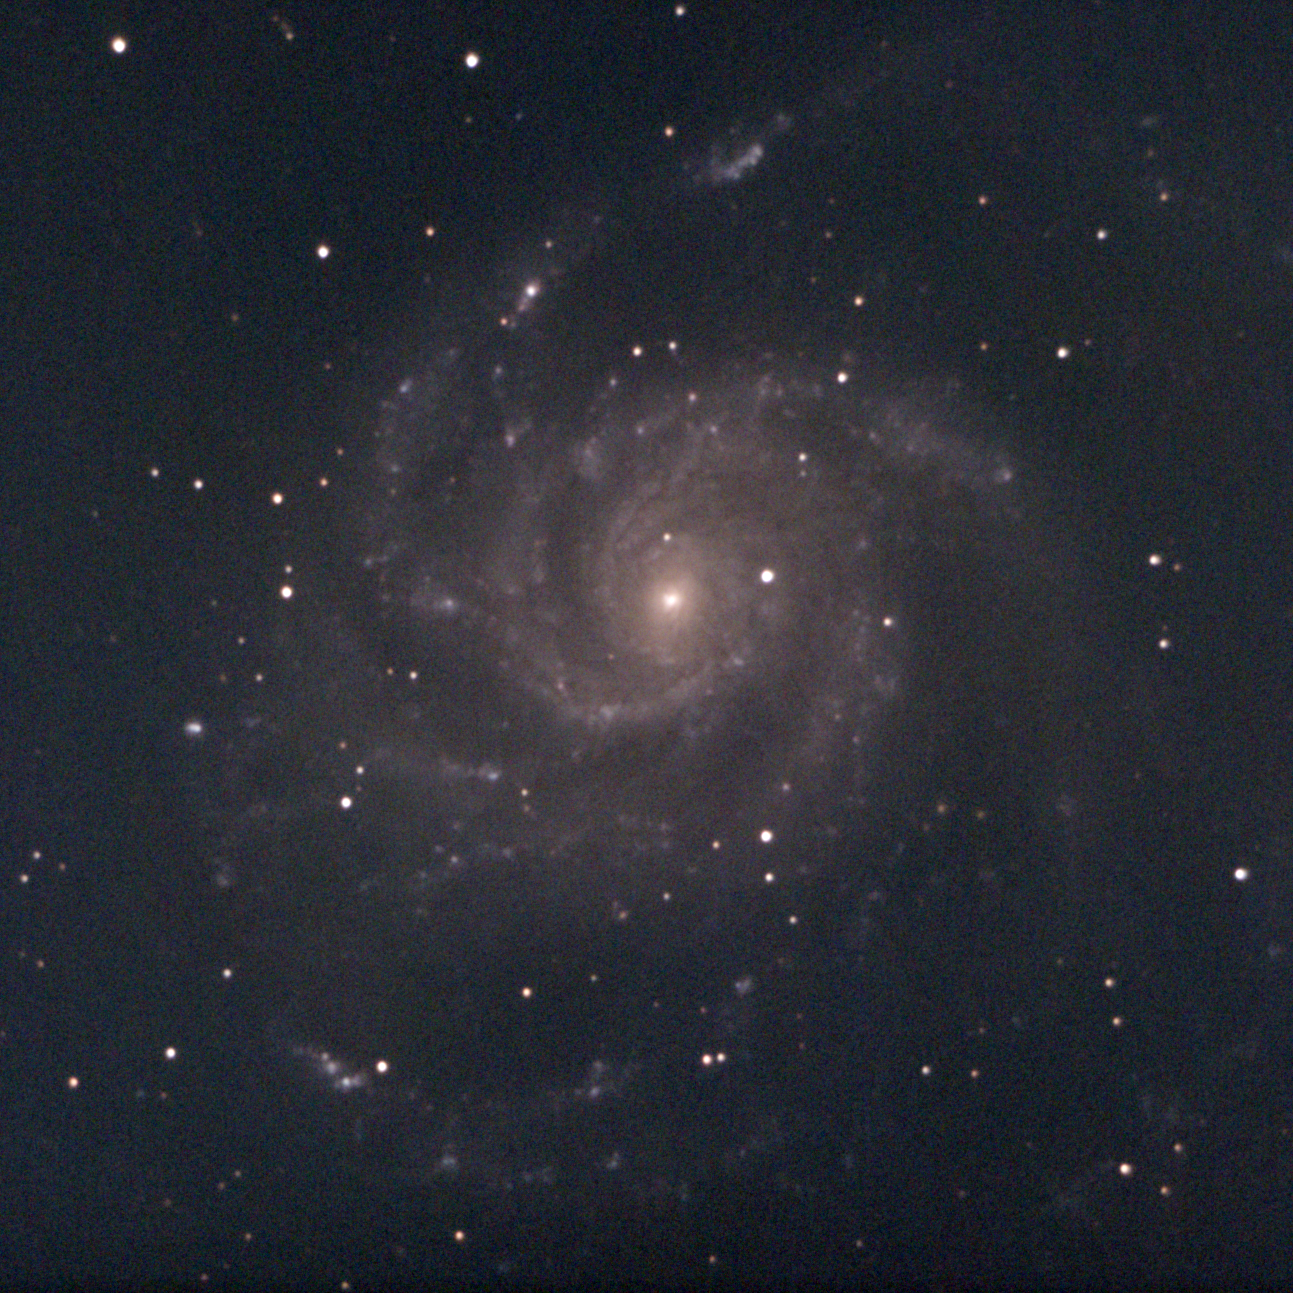 M101 风车星系（Pinwheel Galaxy），位于大熊座，是正面朝向地球的螺旋星系，距离地球大约2100万光年。RGB Bin2 10s * 920，共计2.5小时曝光